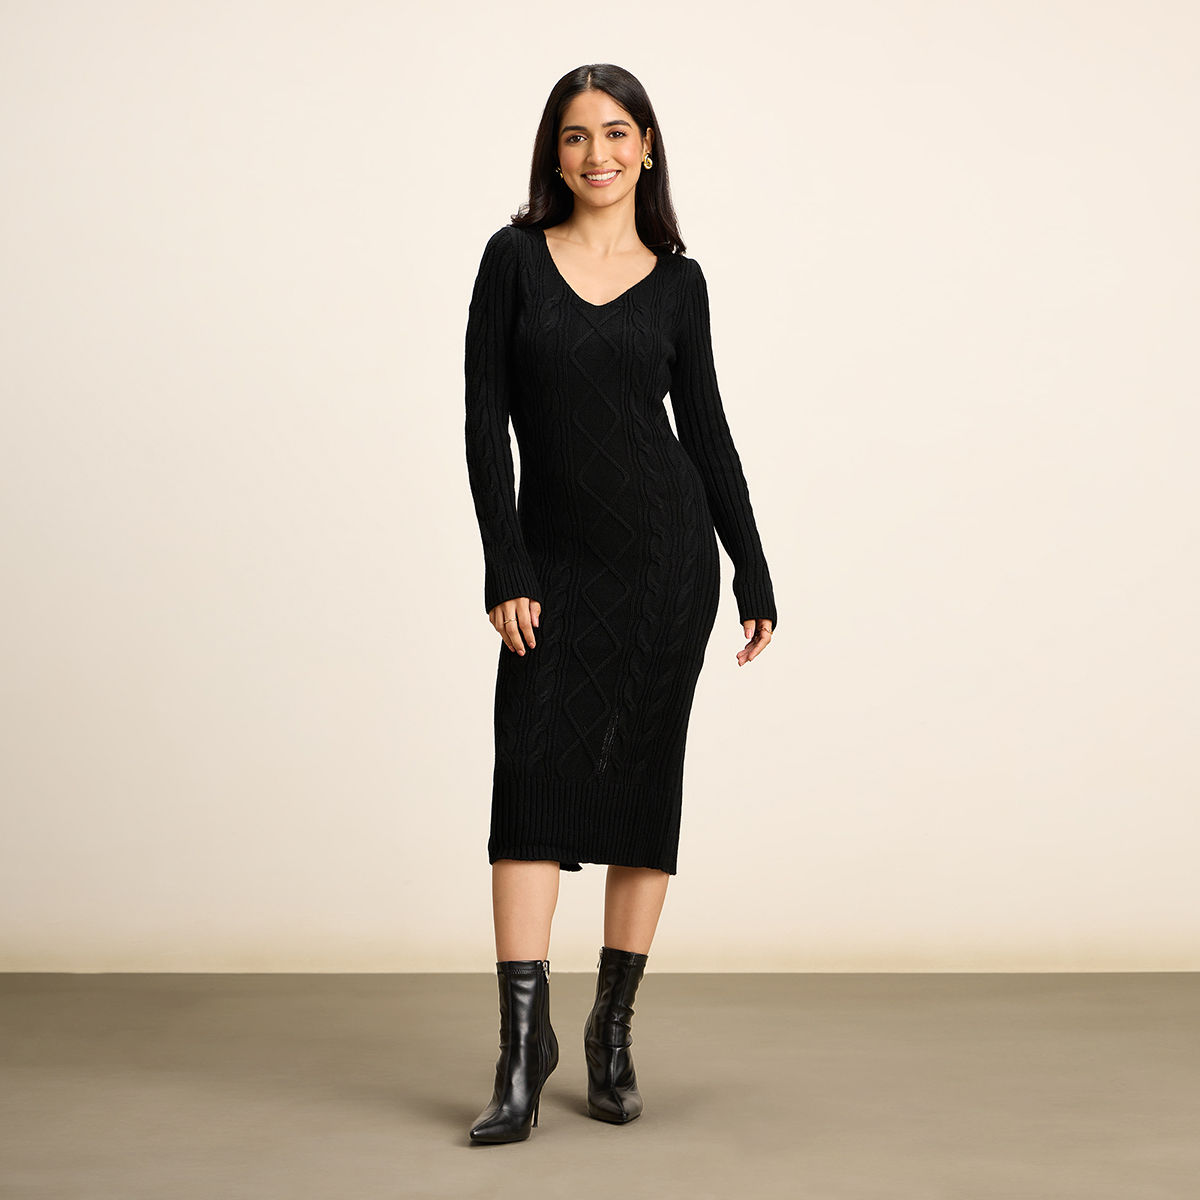 Black Sweater Dresses | Shop at ASOS